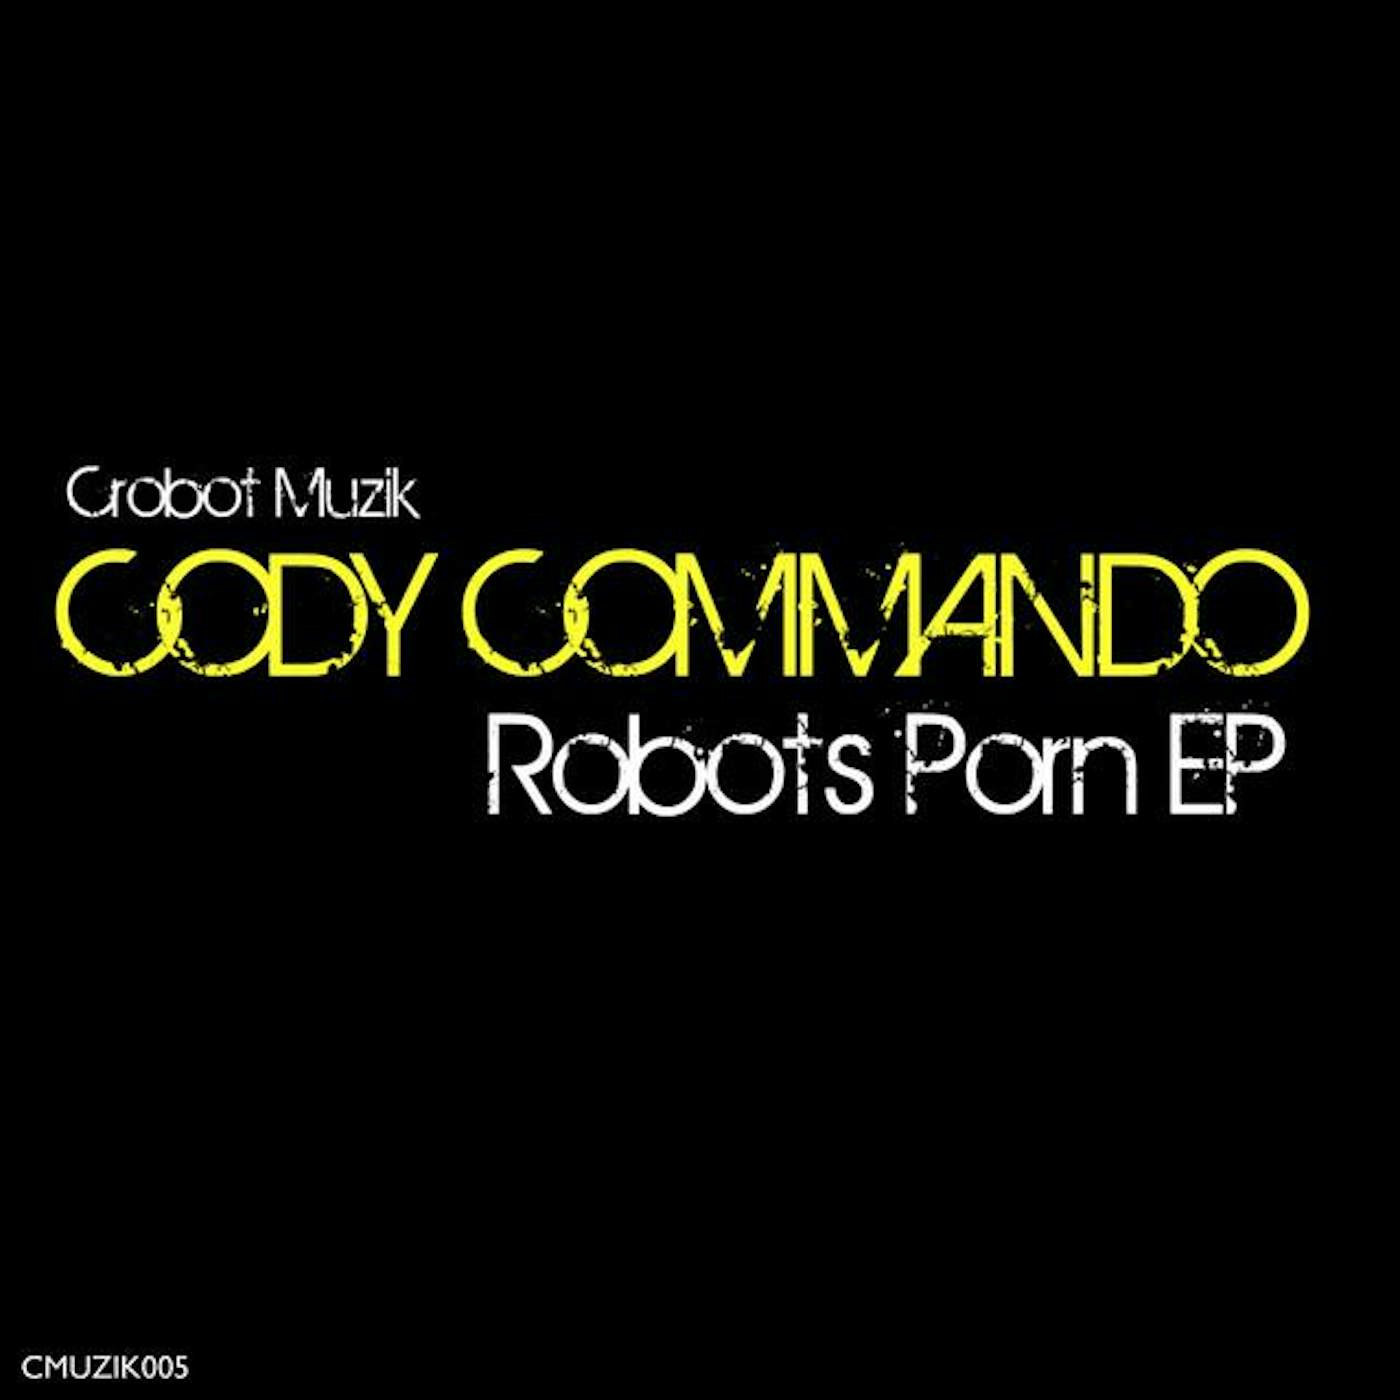 Cody Commando